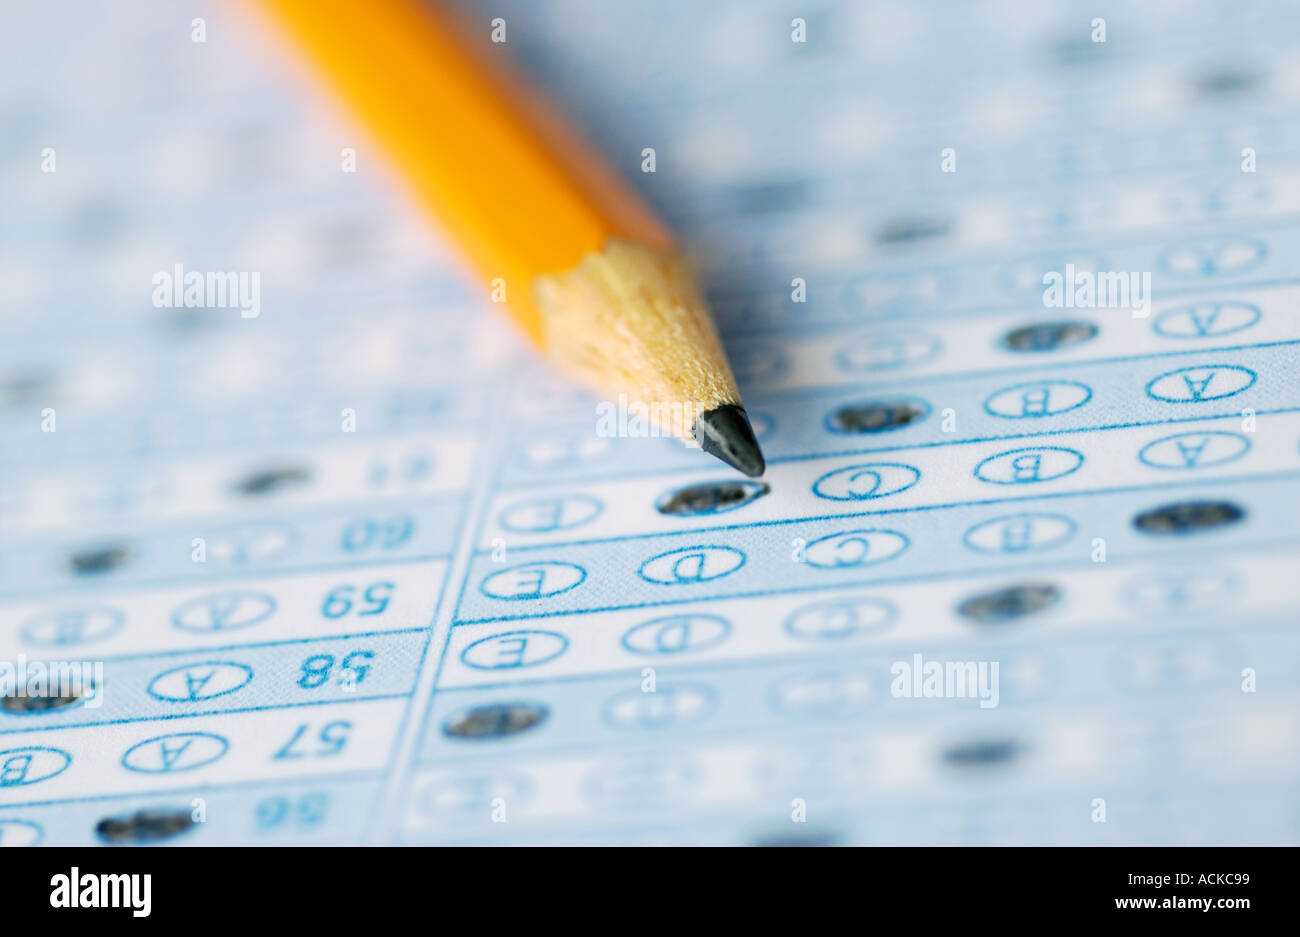 pencil on school test Stock Photo